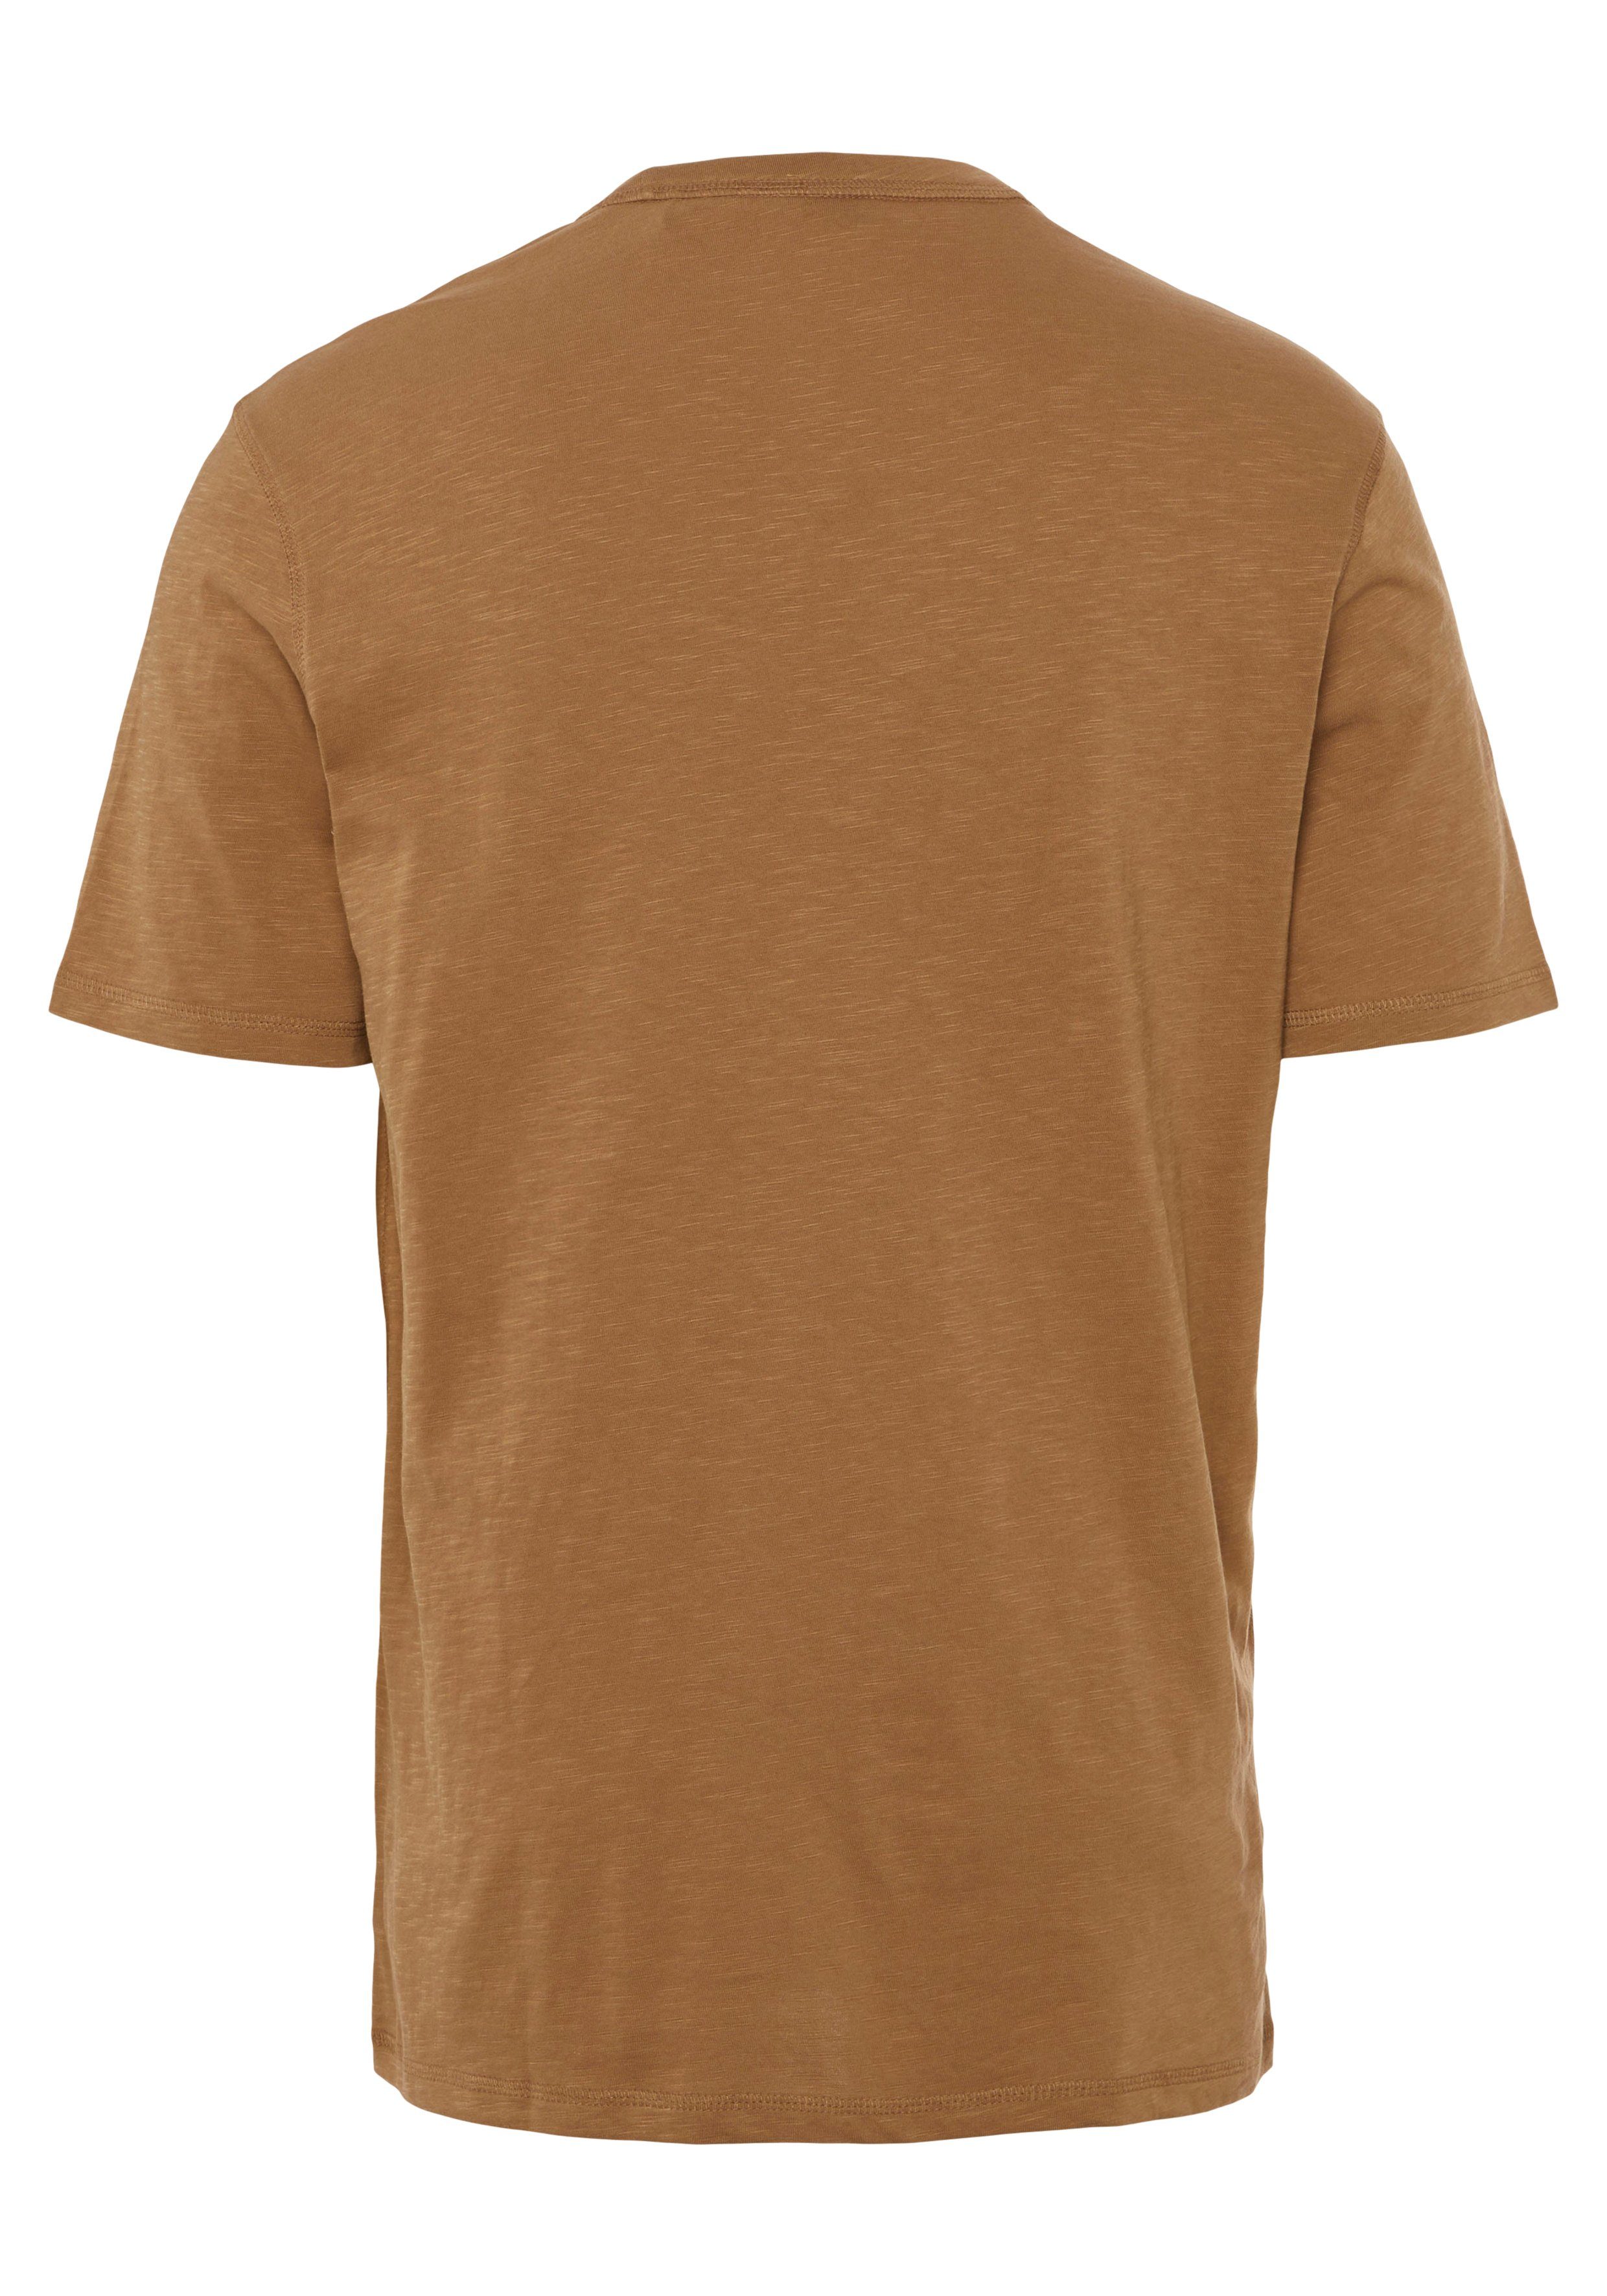 (Packung) Tegood BOSS ORANGE verziert open_beige Overlock-Nähten T-Shirt mit